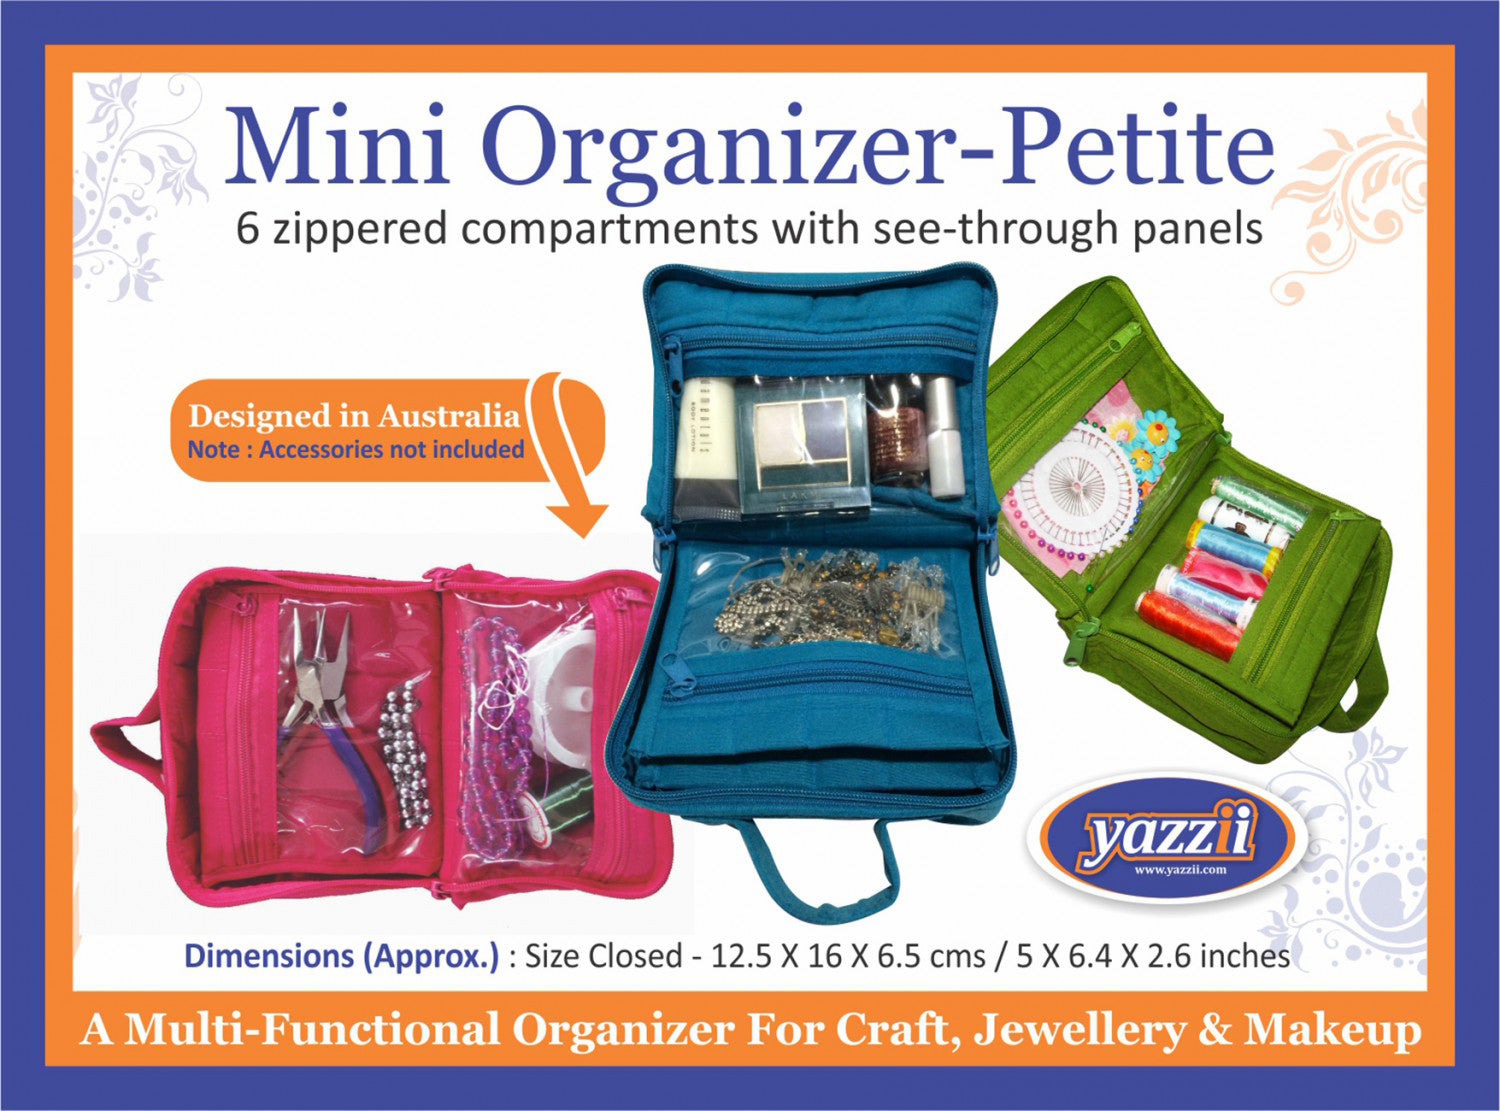 Yazzii Petite Mini Organizers (6 color options)